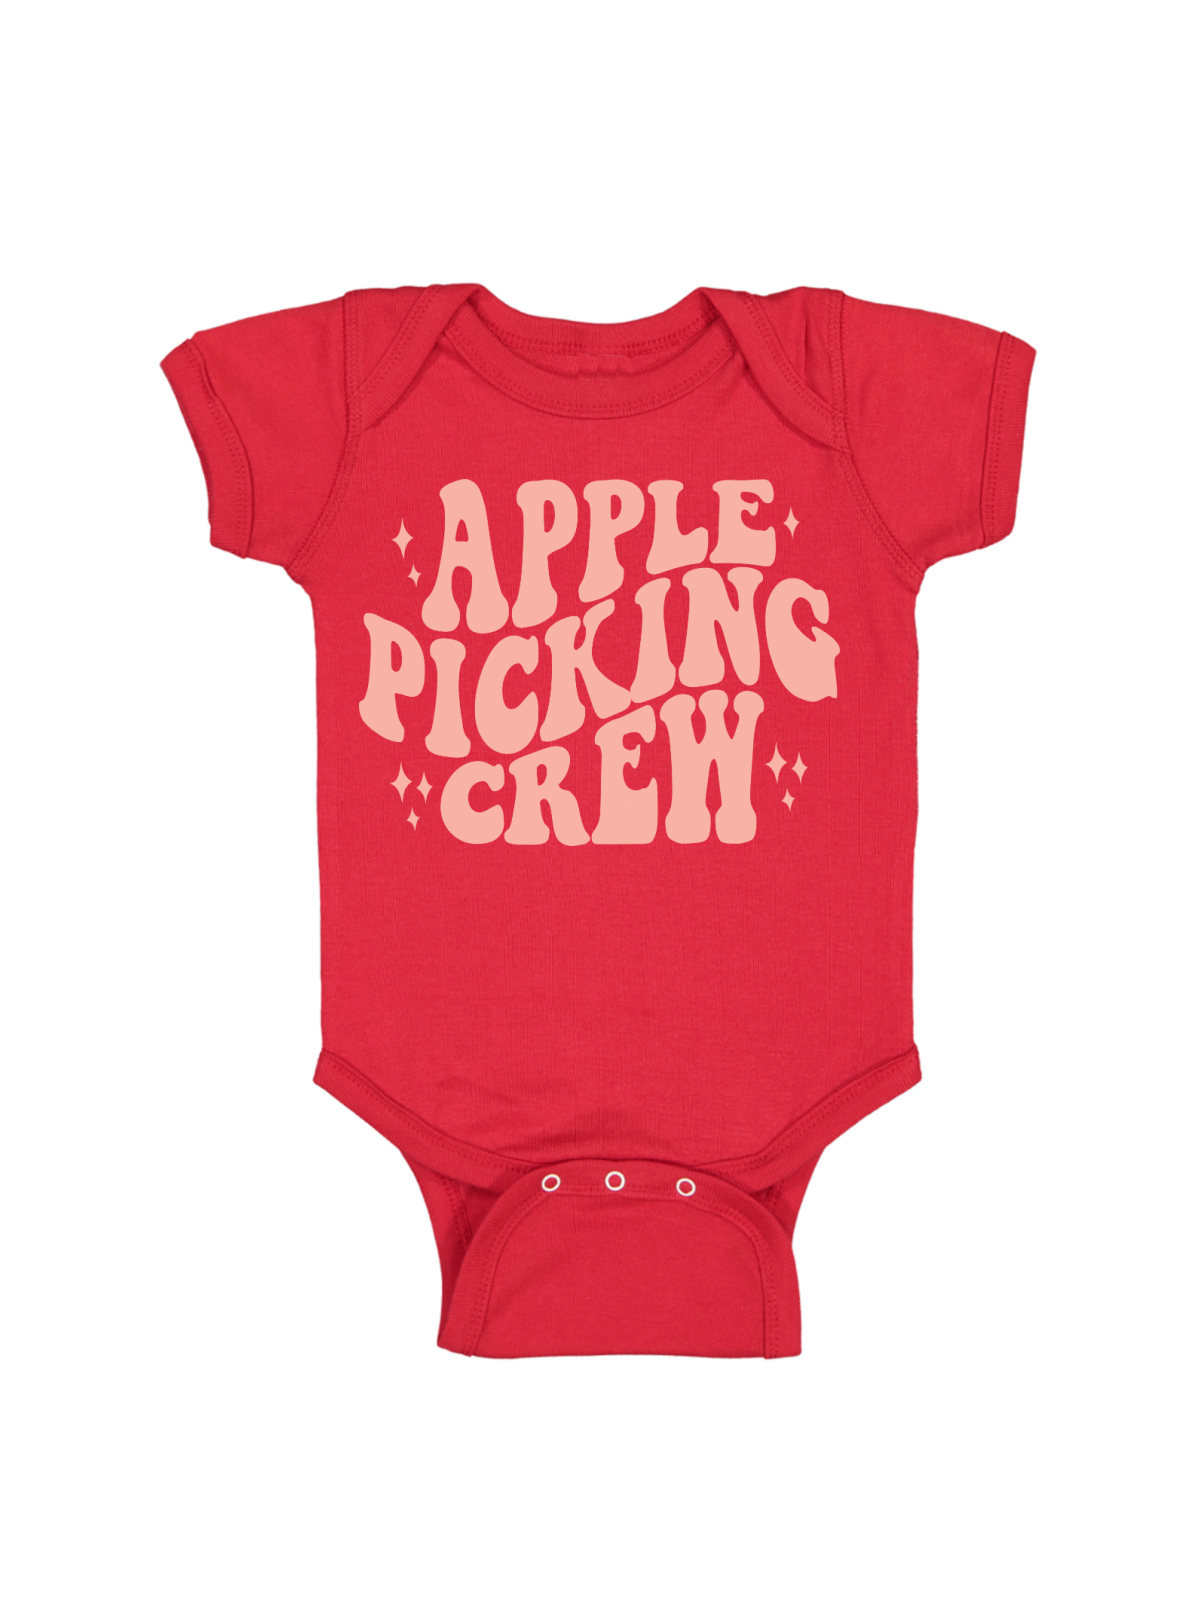 Apple Picking Crew Baby Bodysuit in Red